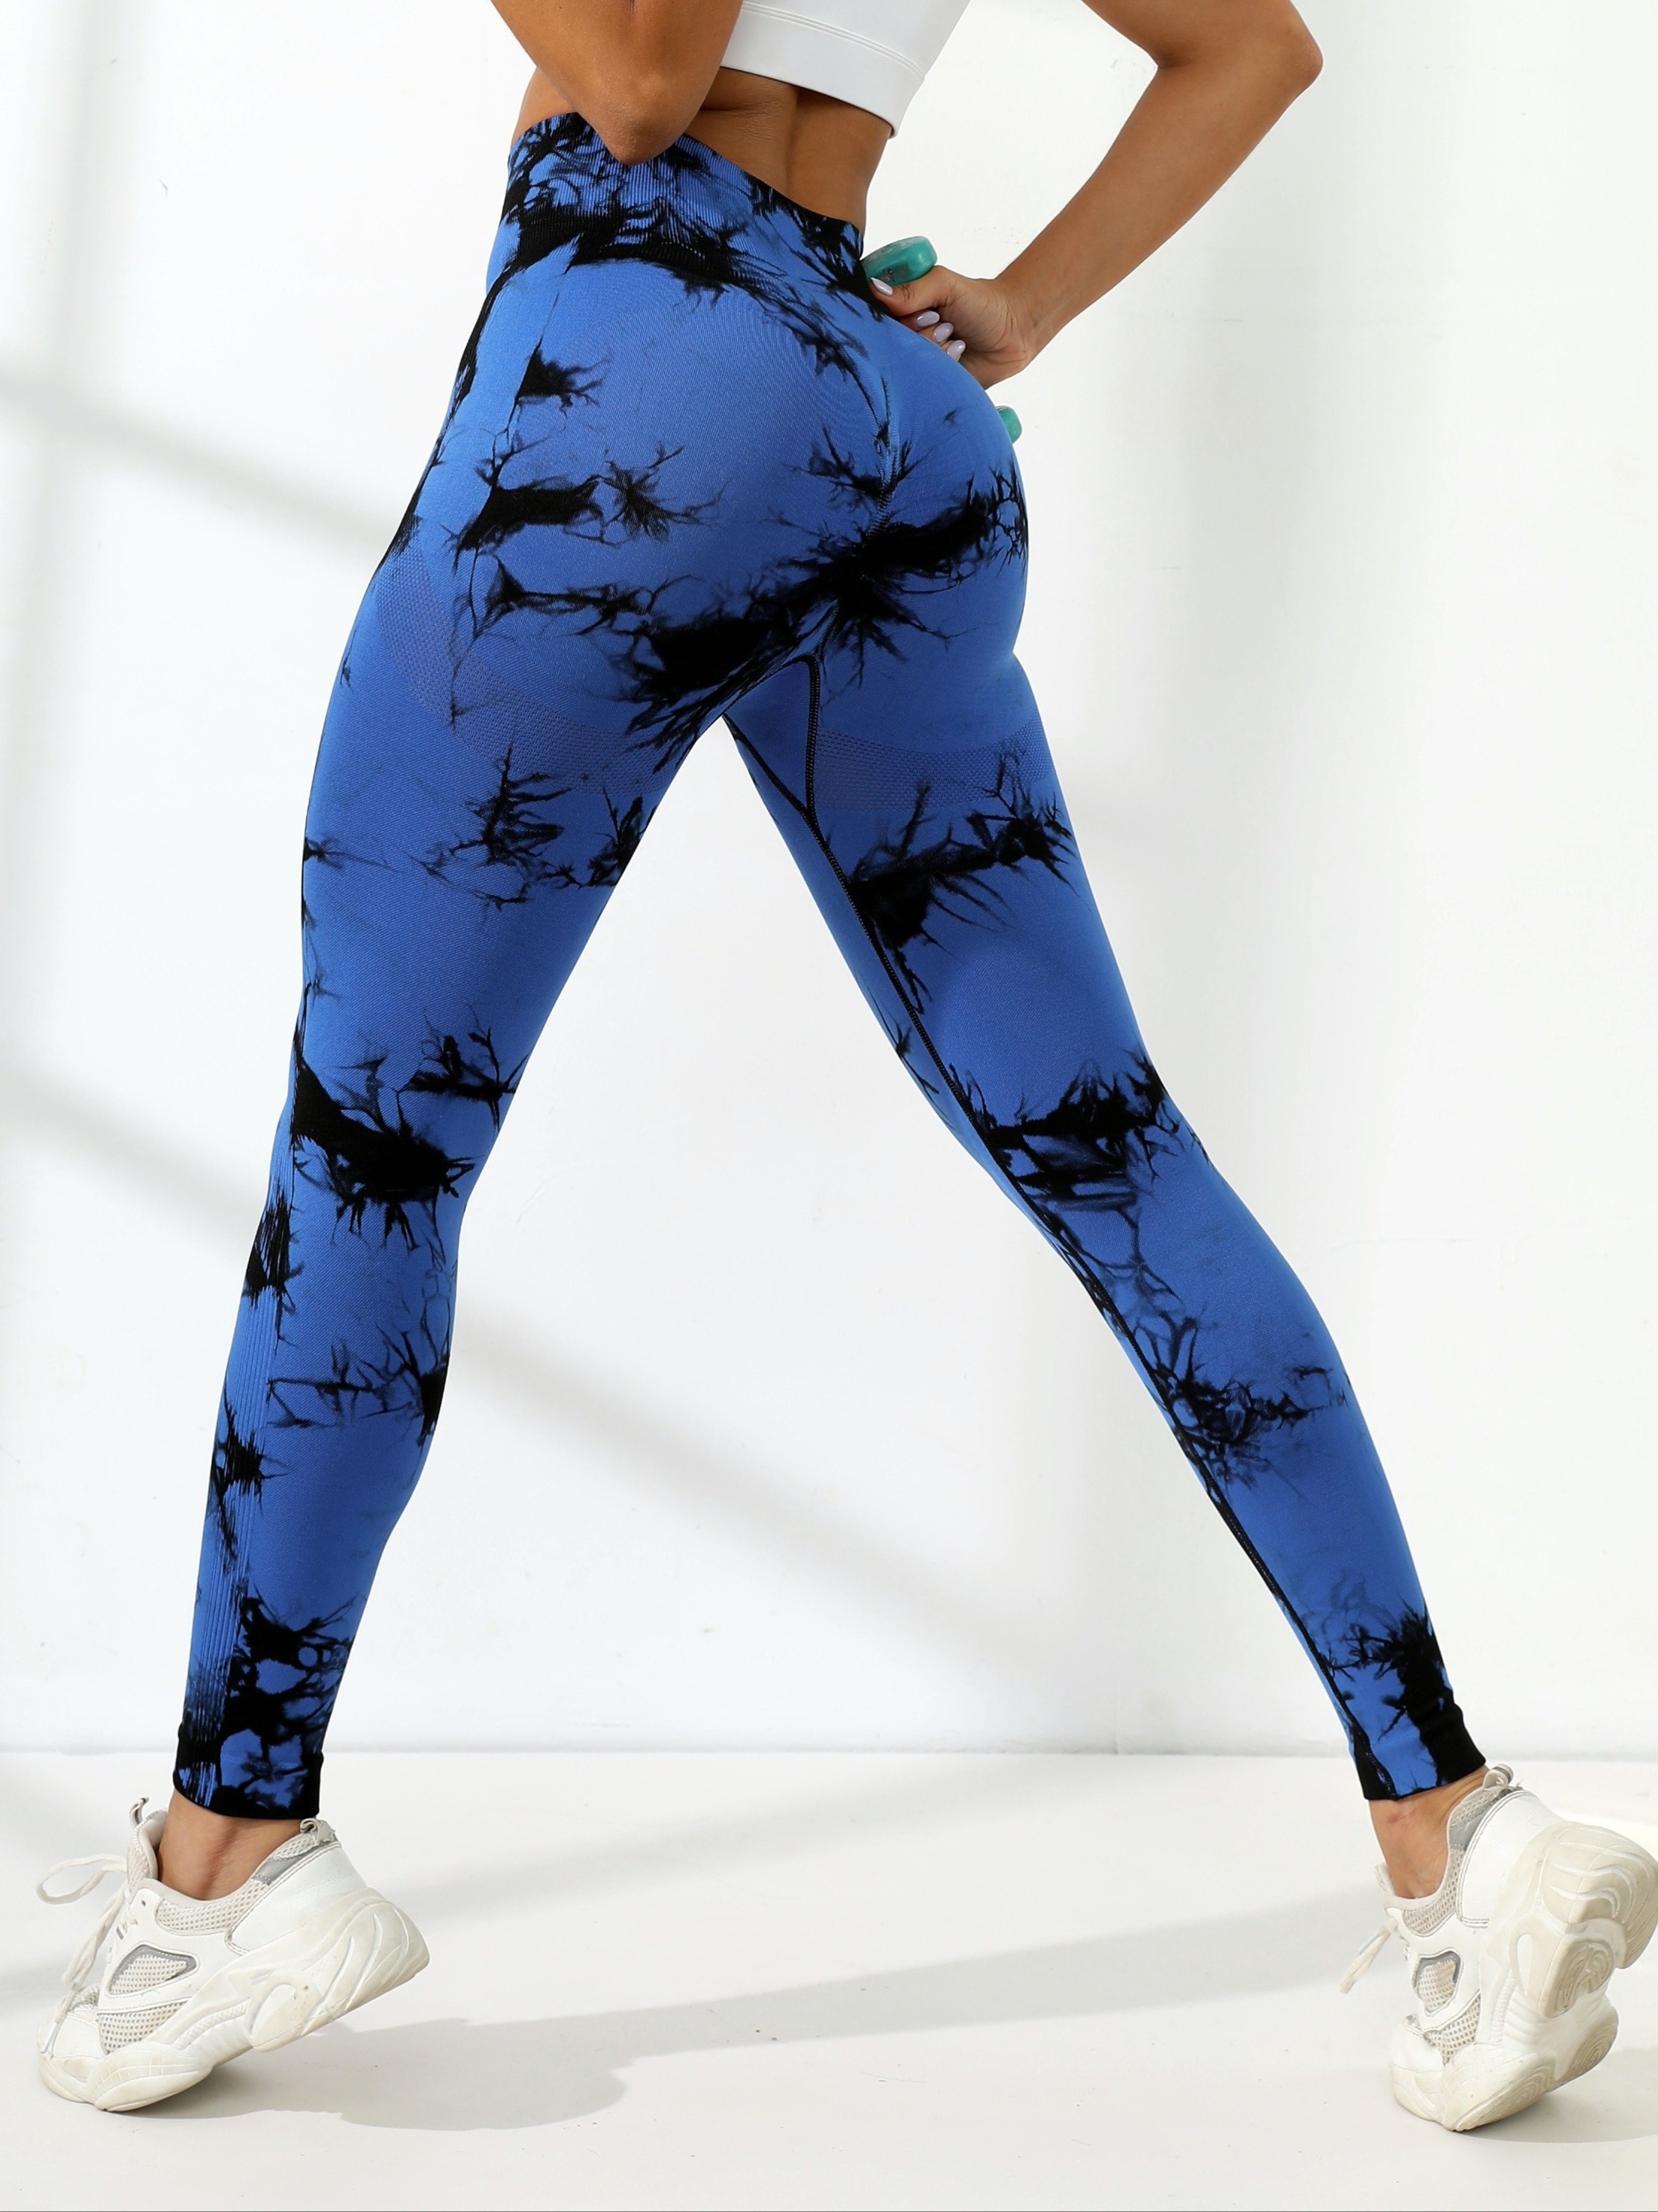 RYDCOT Women's Tie-Dye Breathable Hip Lifting Exercise Bubble Yoga Pants 